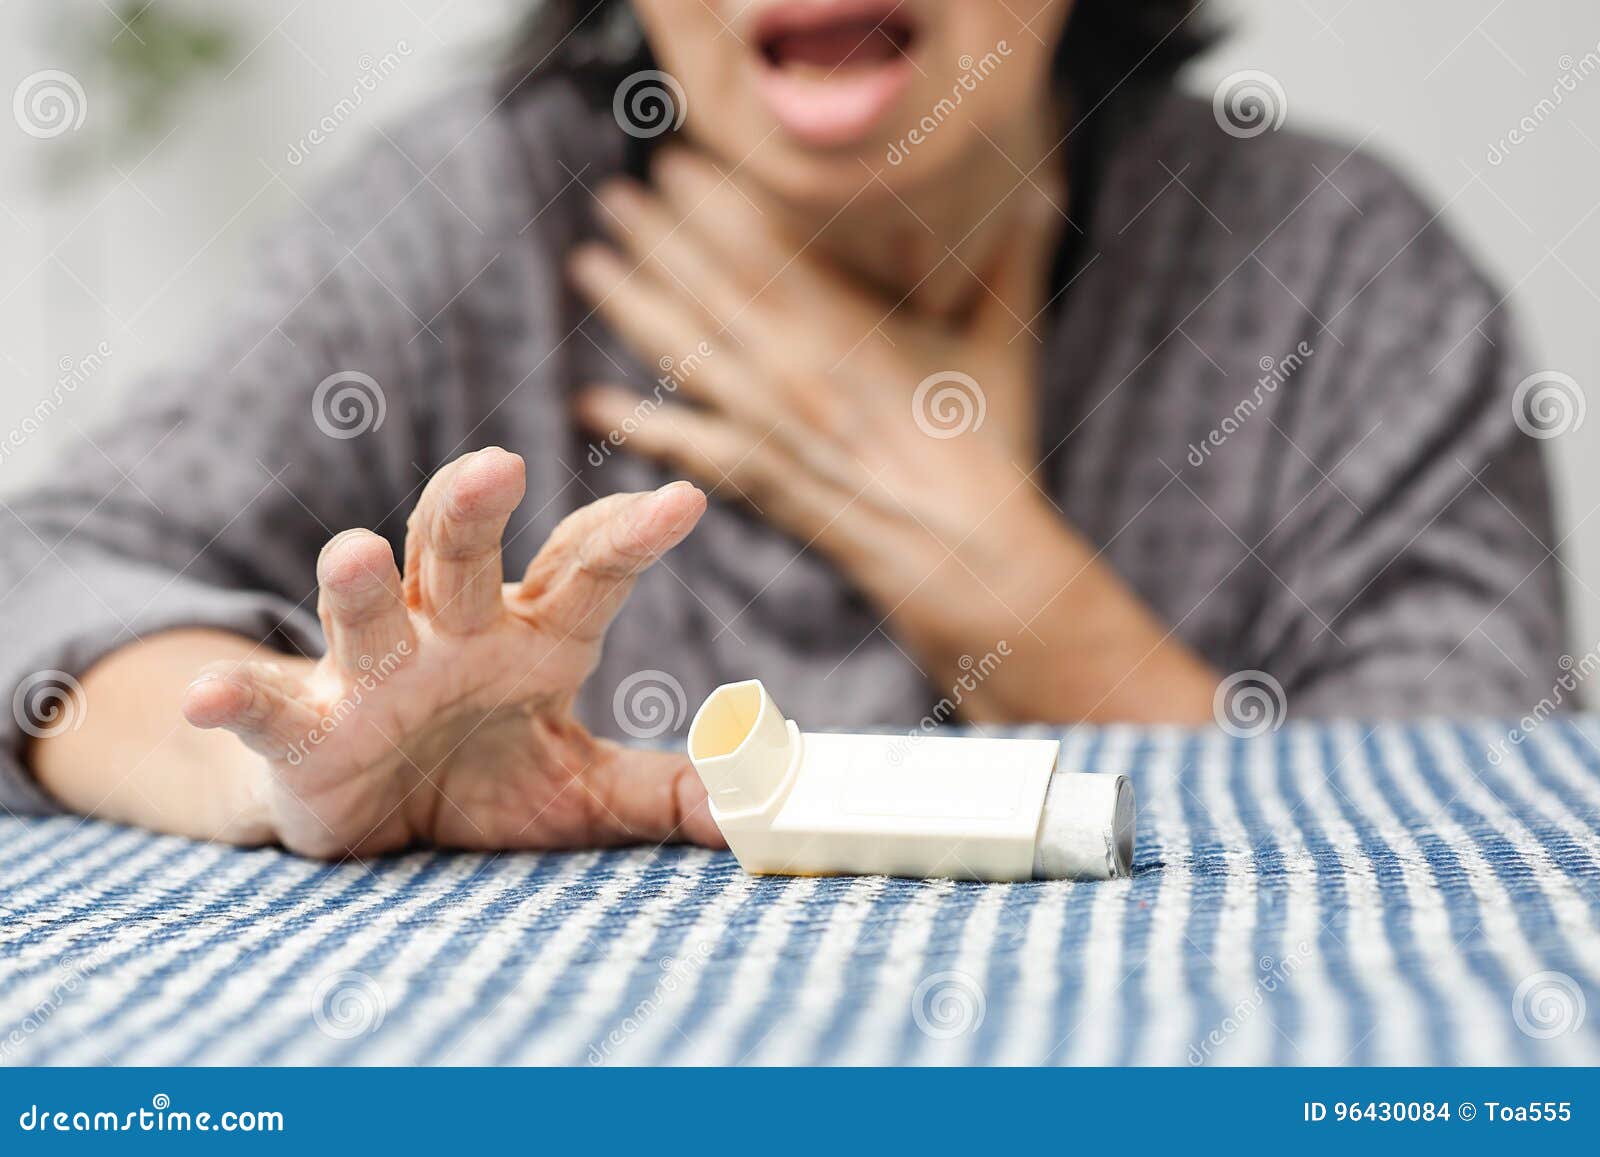 elderly woman choking and holding an asthma spray